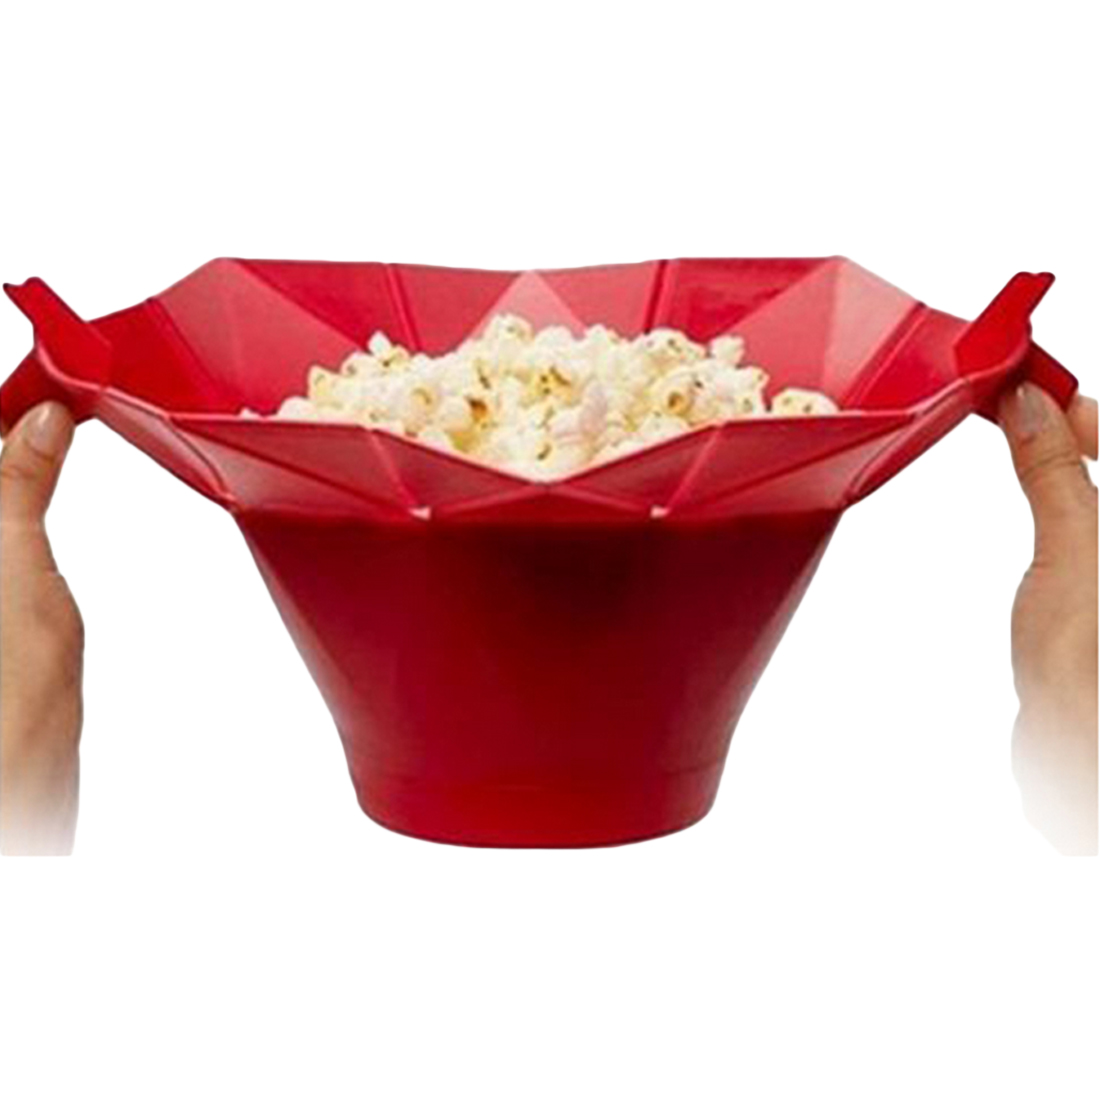 https://alitools.io/en/showcase/image?url=https%3A%2F%2Fae01.alicdn.com%2Fkf%2FHTB1S6LzX5zxK1RkSnaVq6xn9VXar%2FKitchen-Popcorn-Maker-DIY-Silicone-Microwave-Popcorn-Maker-Fold-Bucket-Food-Container.jpg